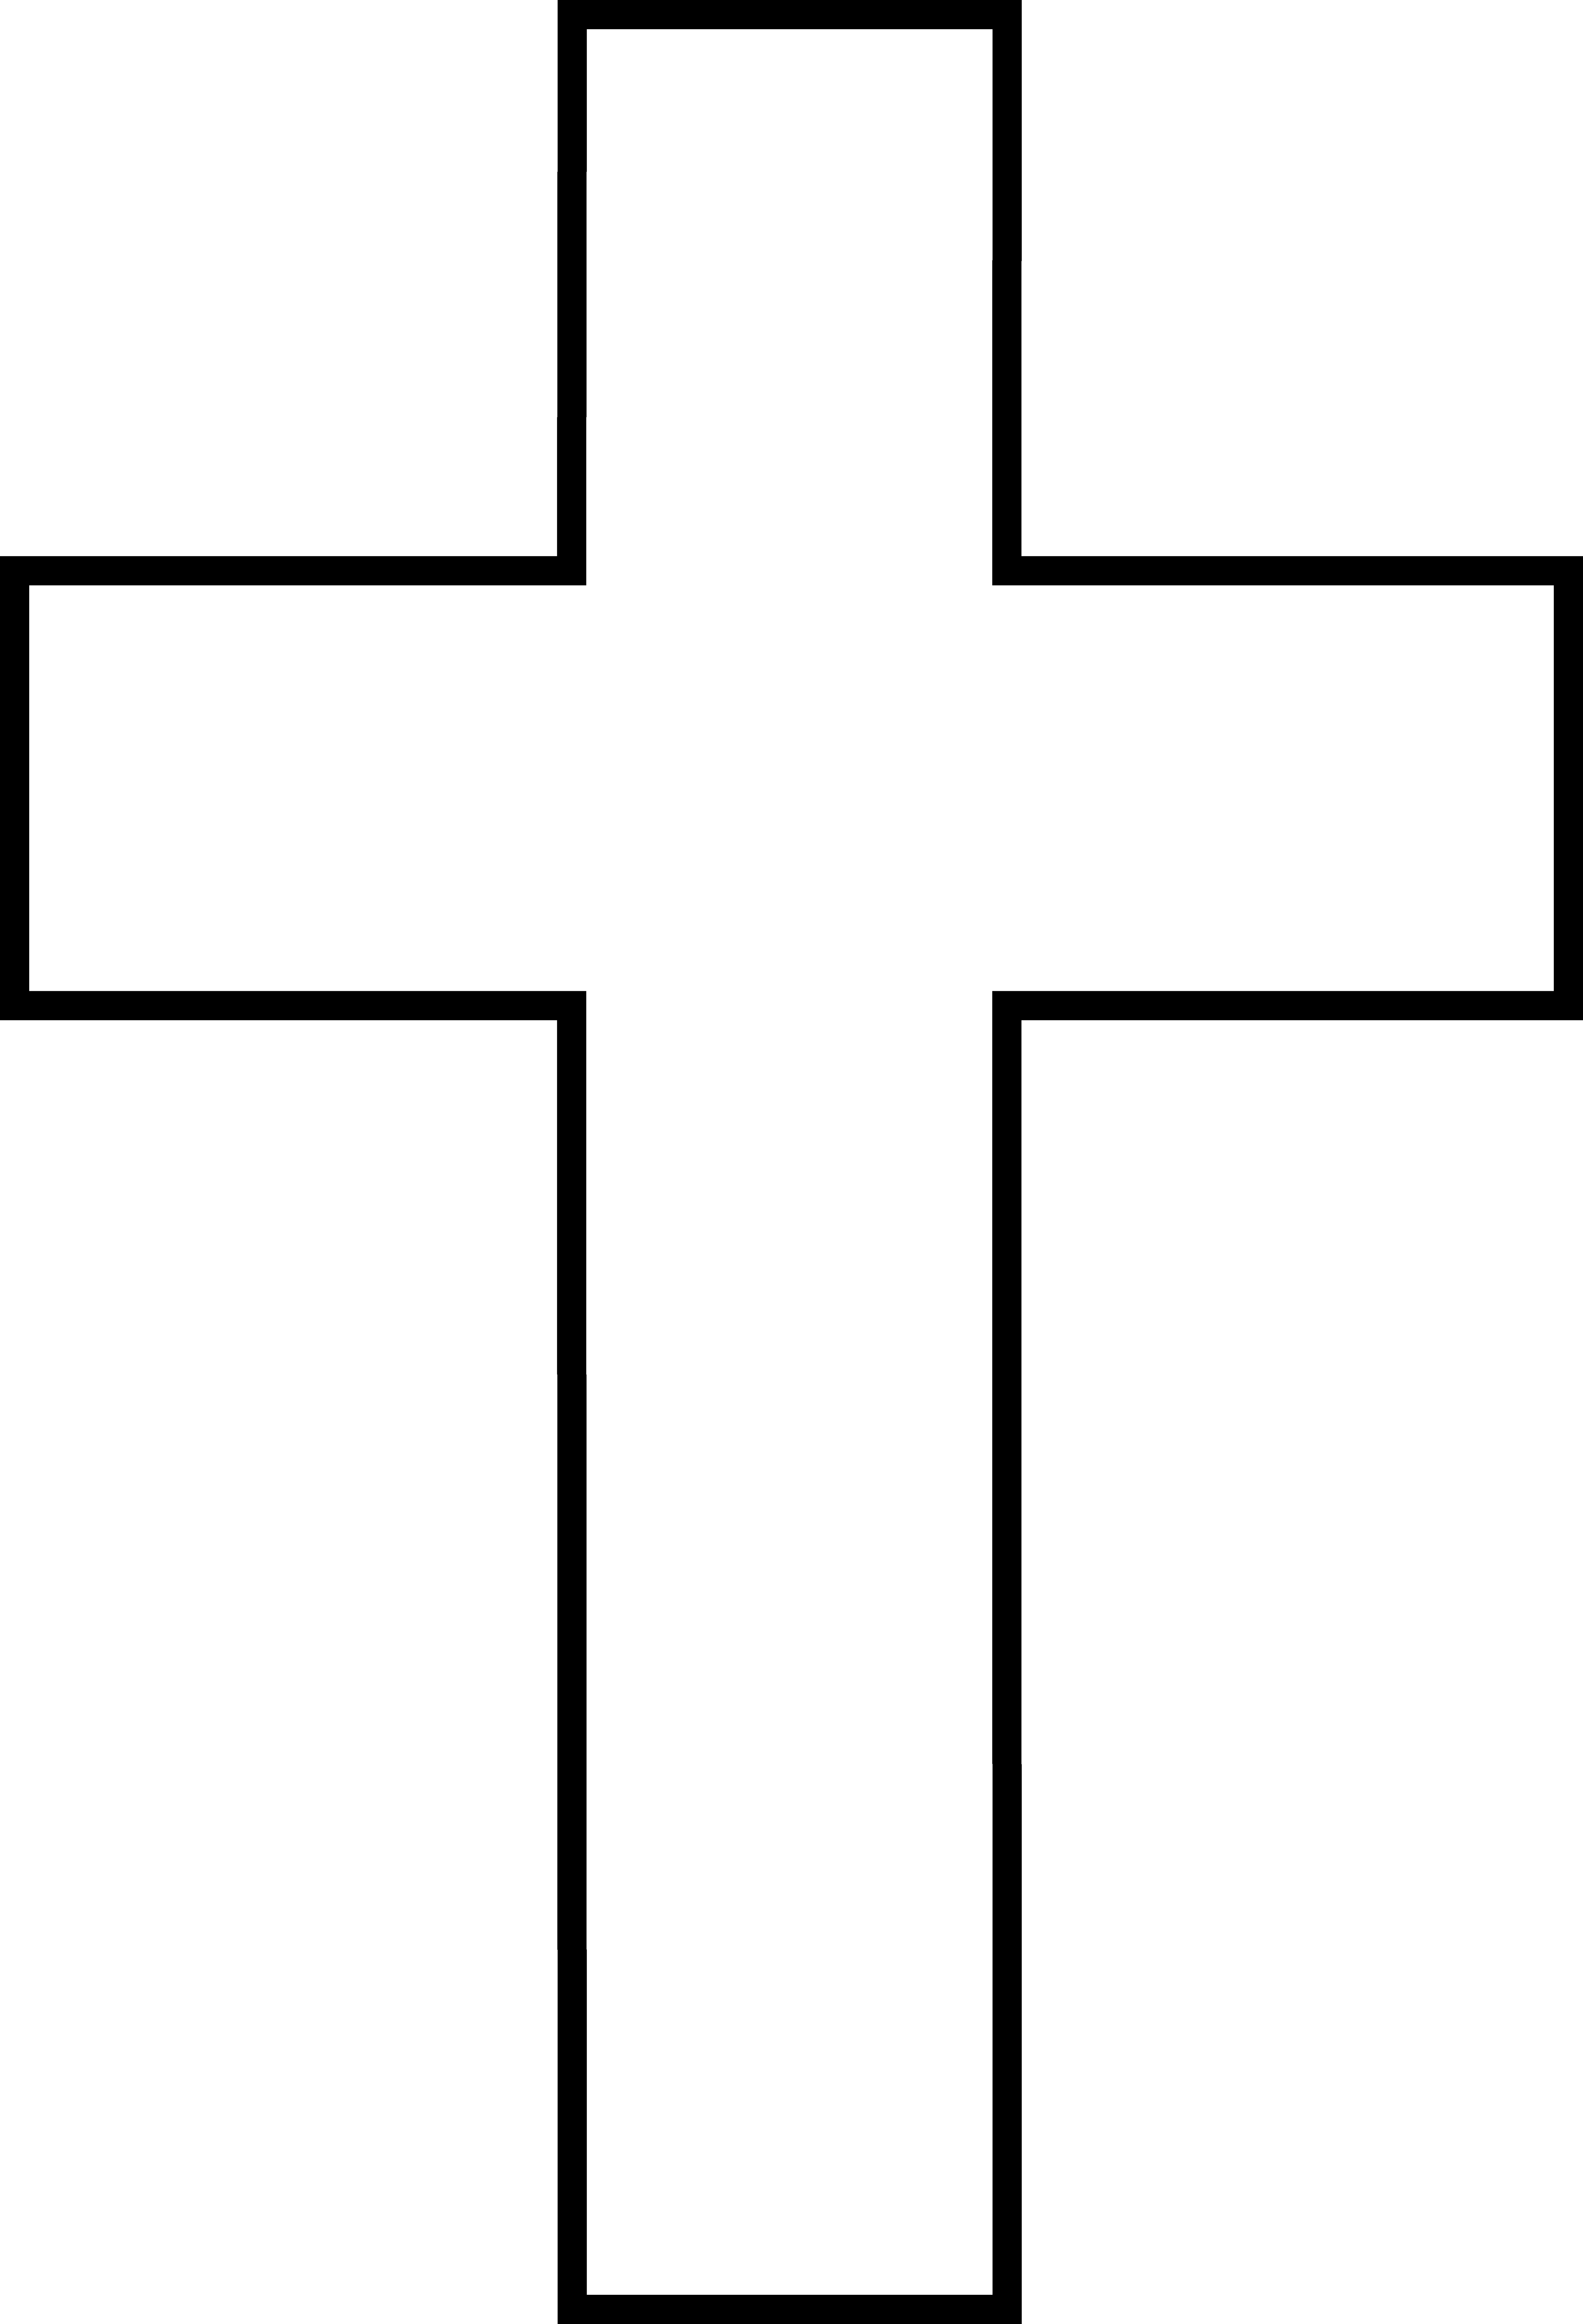 Clip art of a cross